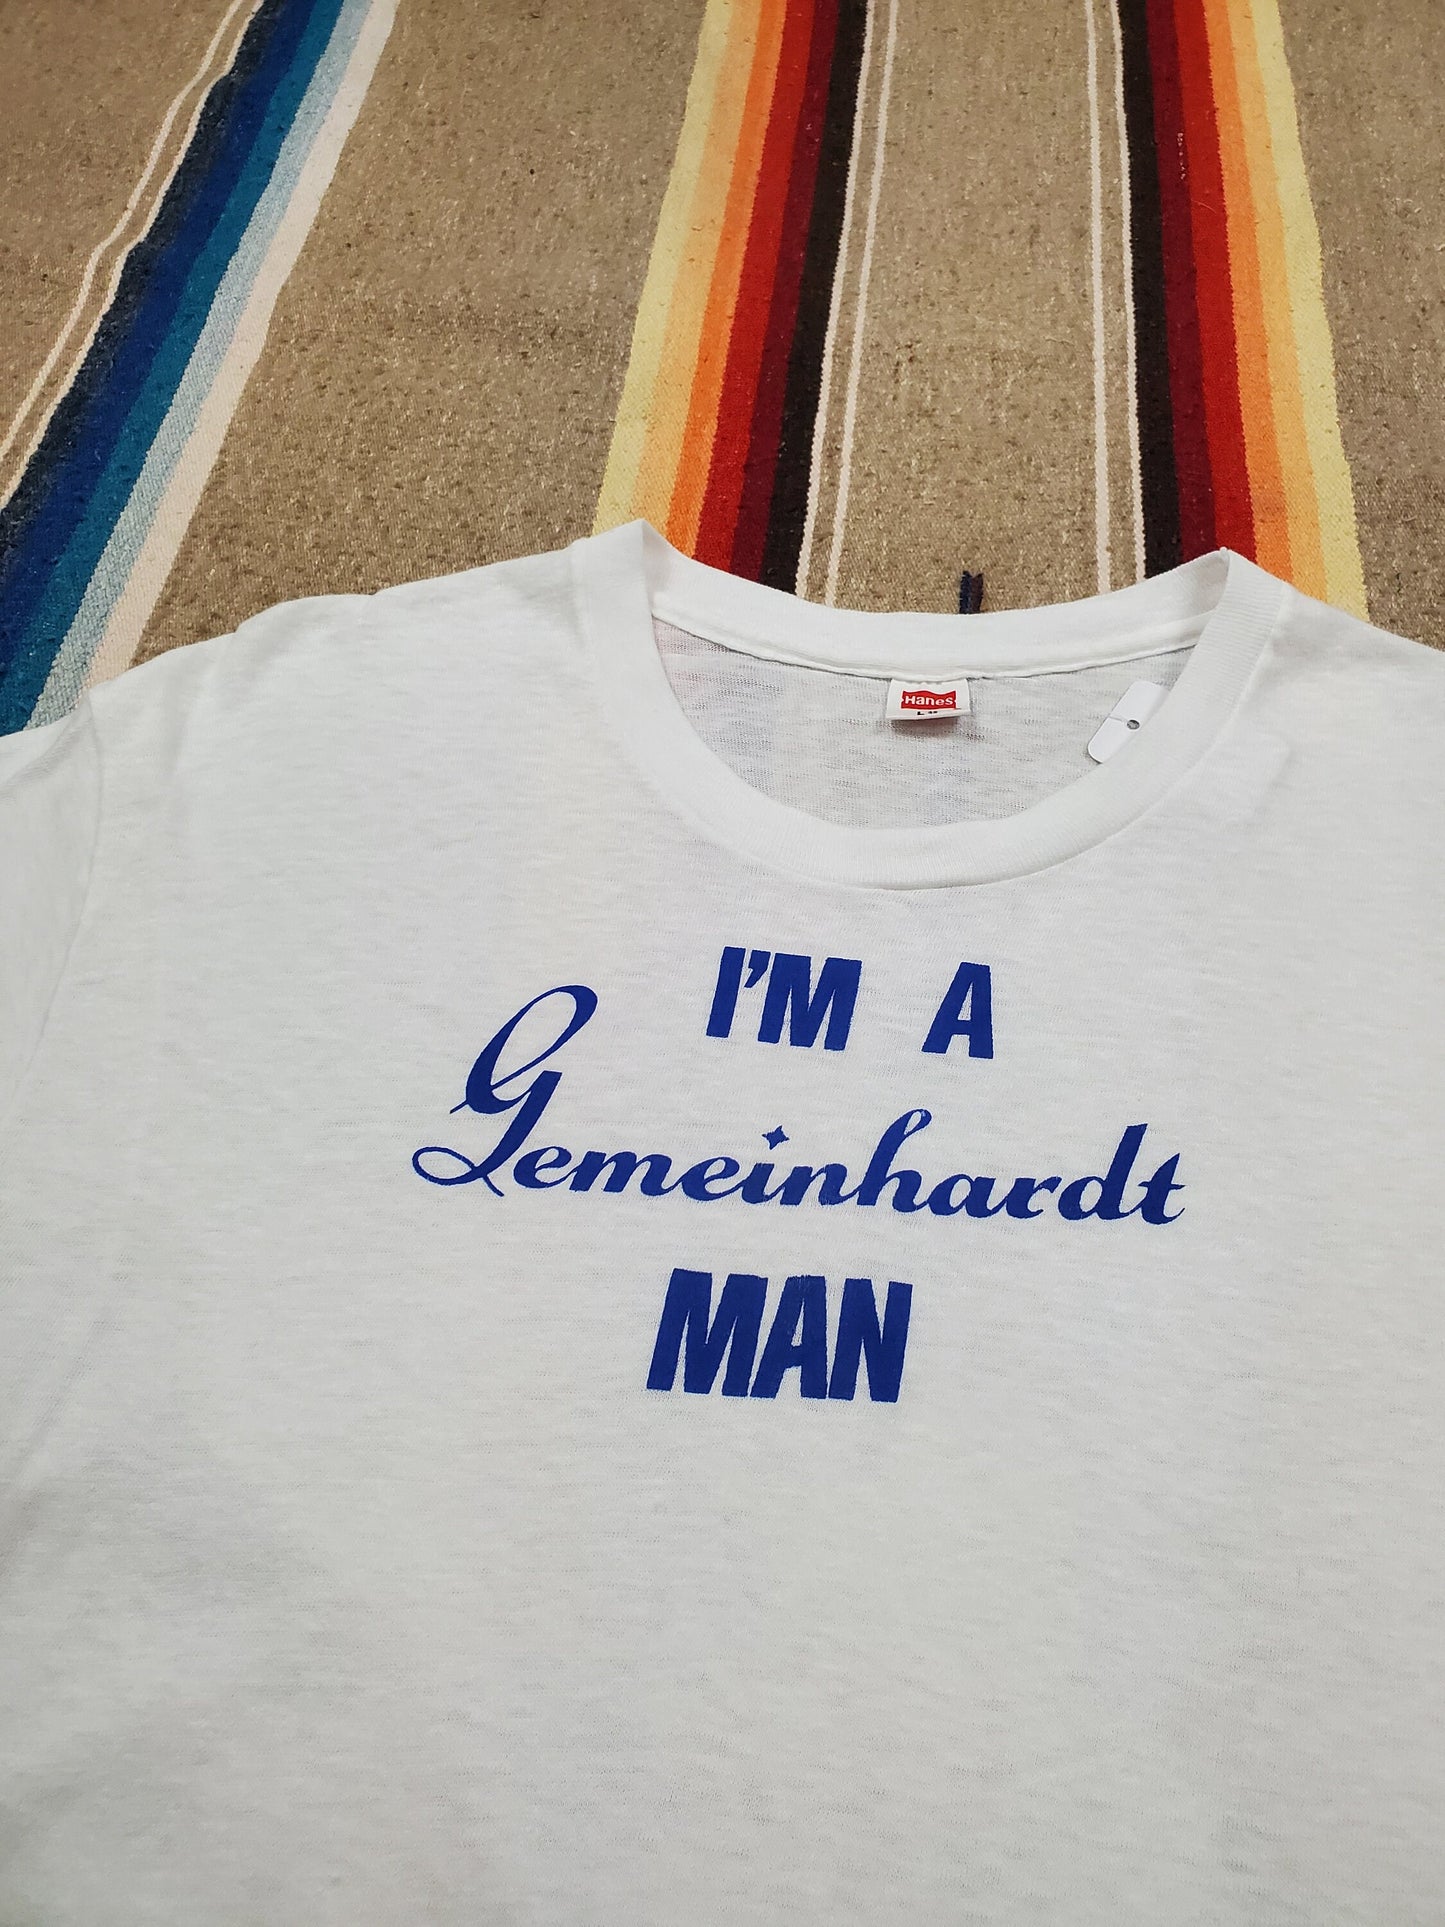 1970s Hanes I'm a Gemeinhardt Man Musical Instruments T-Shirt Size M